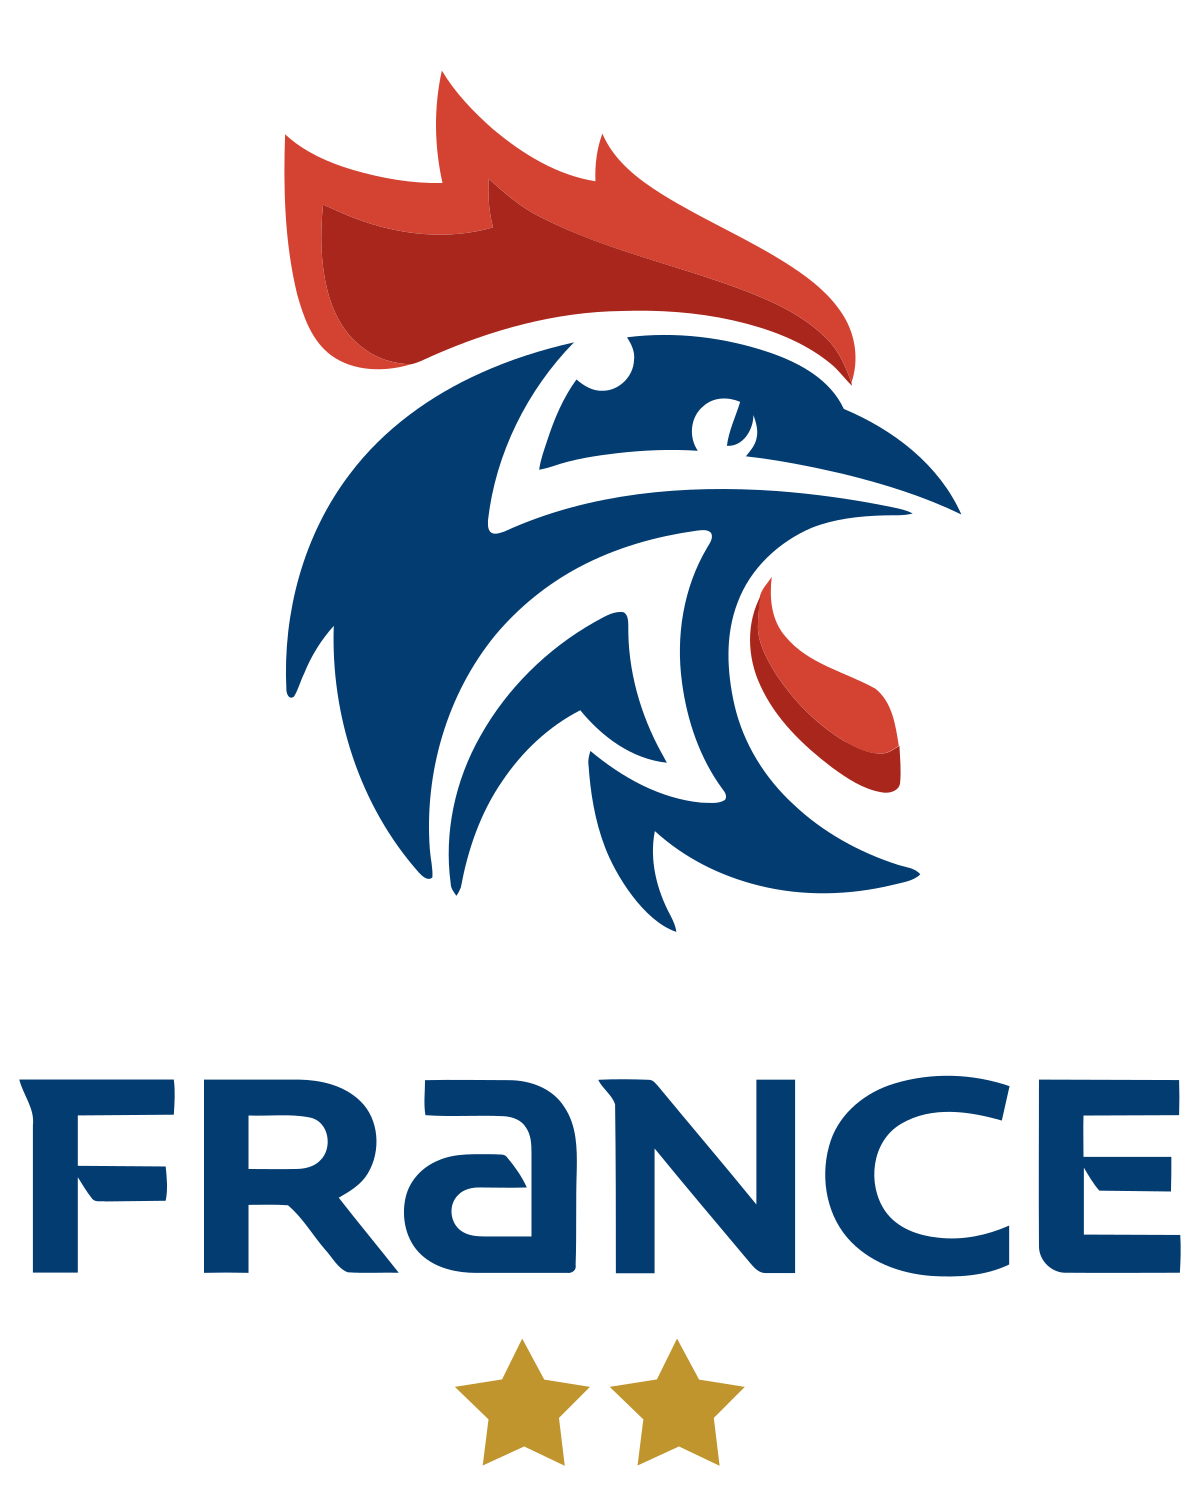 Programme TV France (F)